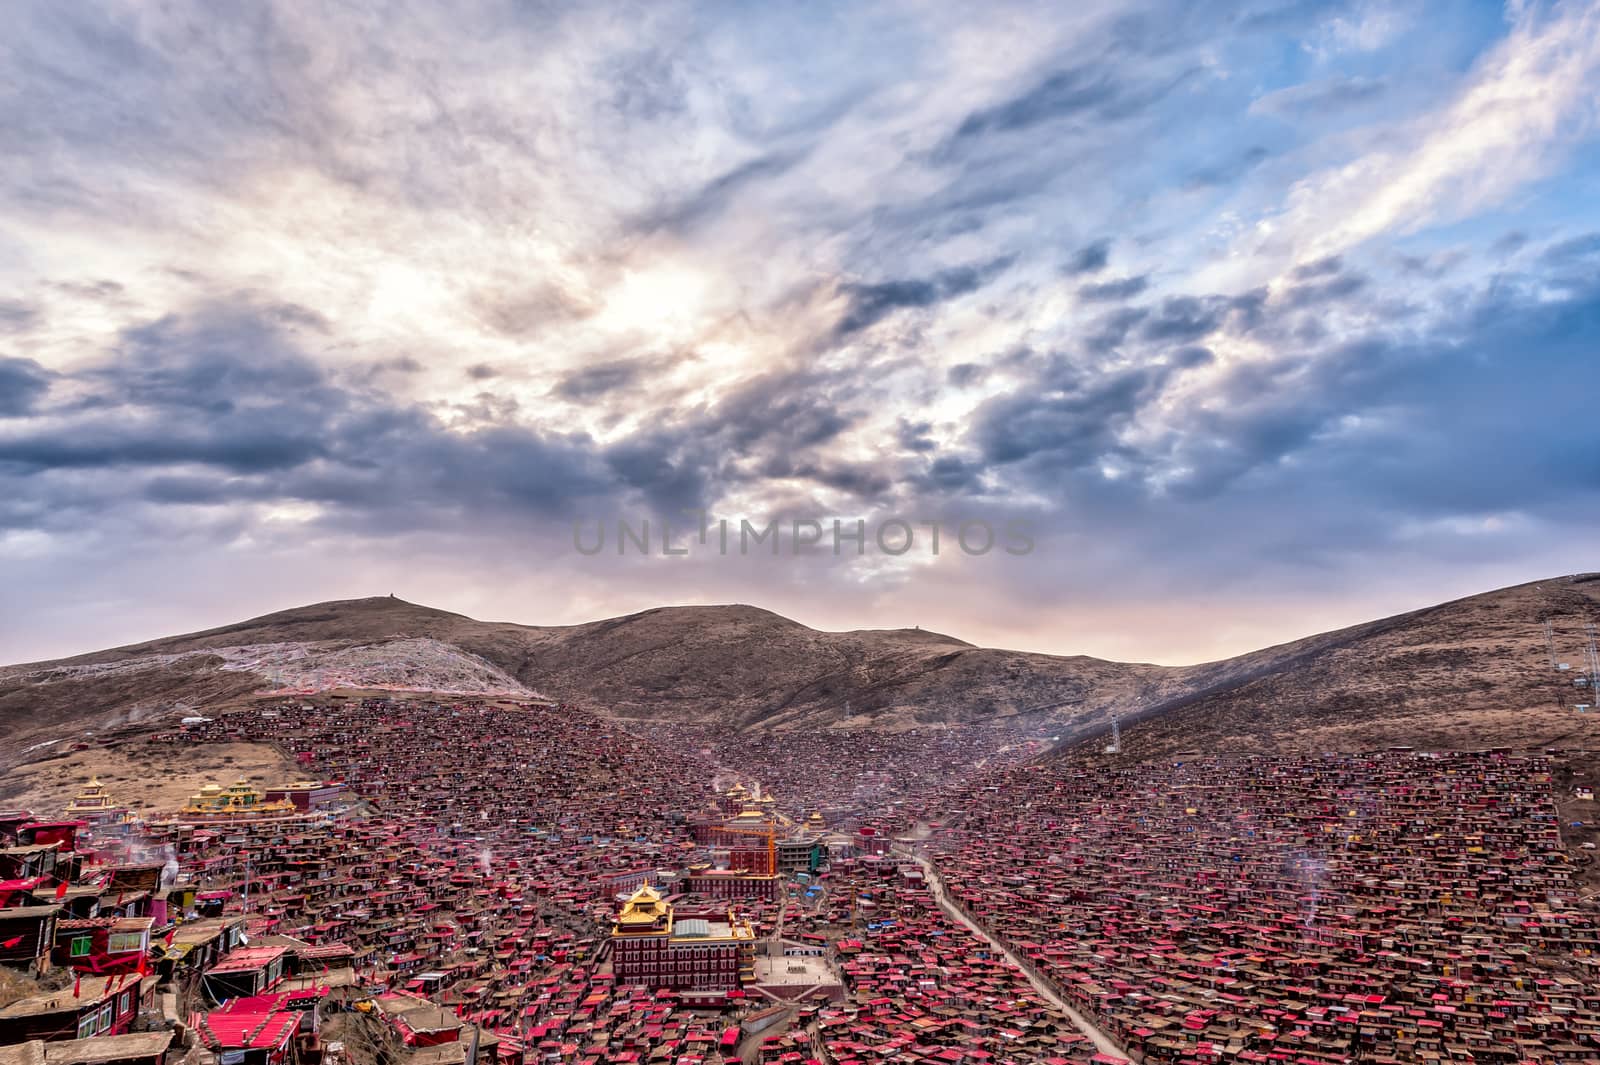 Lharong Monastery of Sertar by JasonYU